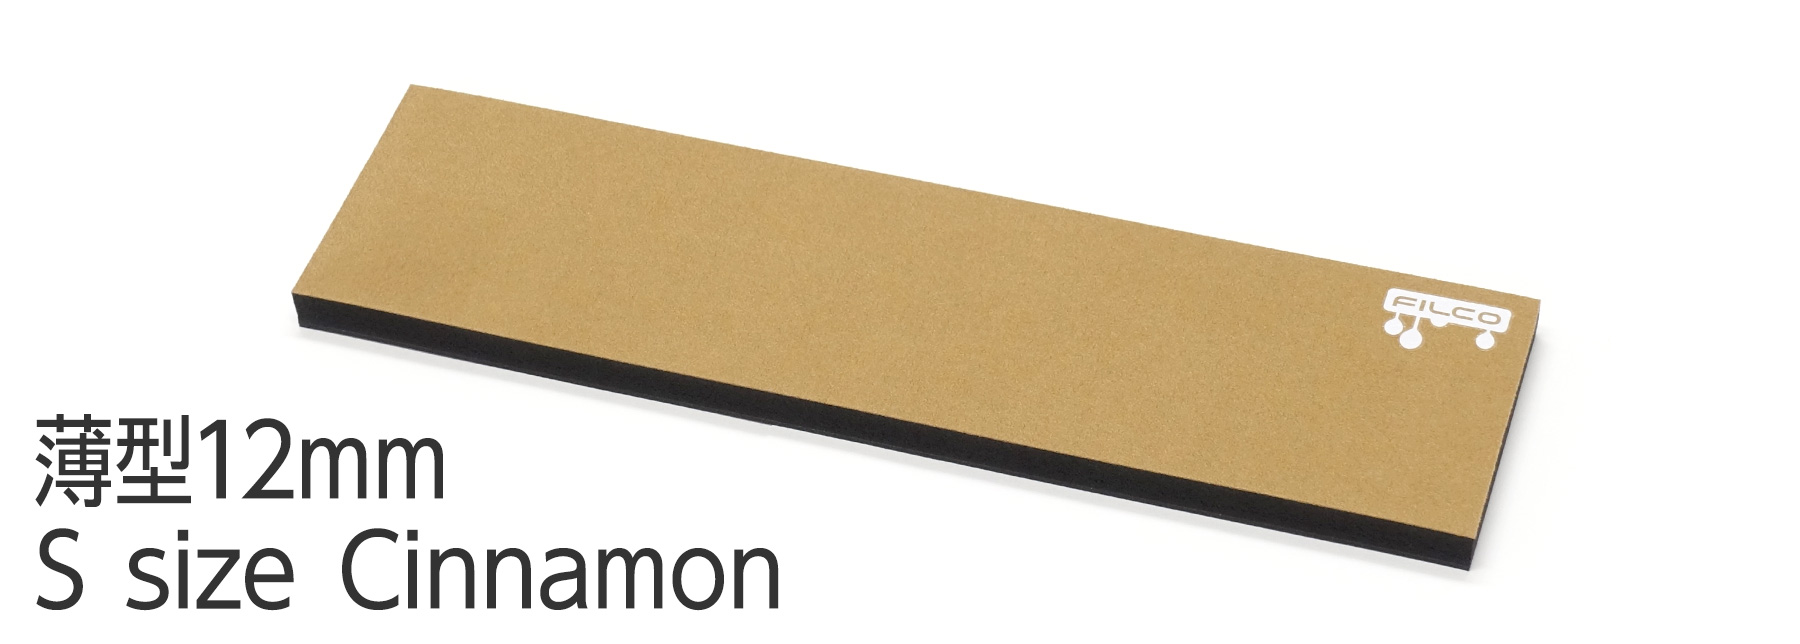 FILCO Majestouch Wrist Rest "Macaron" 薄型12mm・Sサイズ・Cinnamon